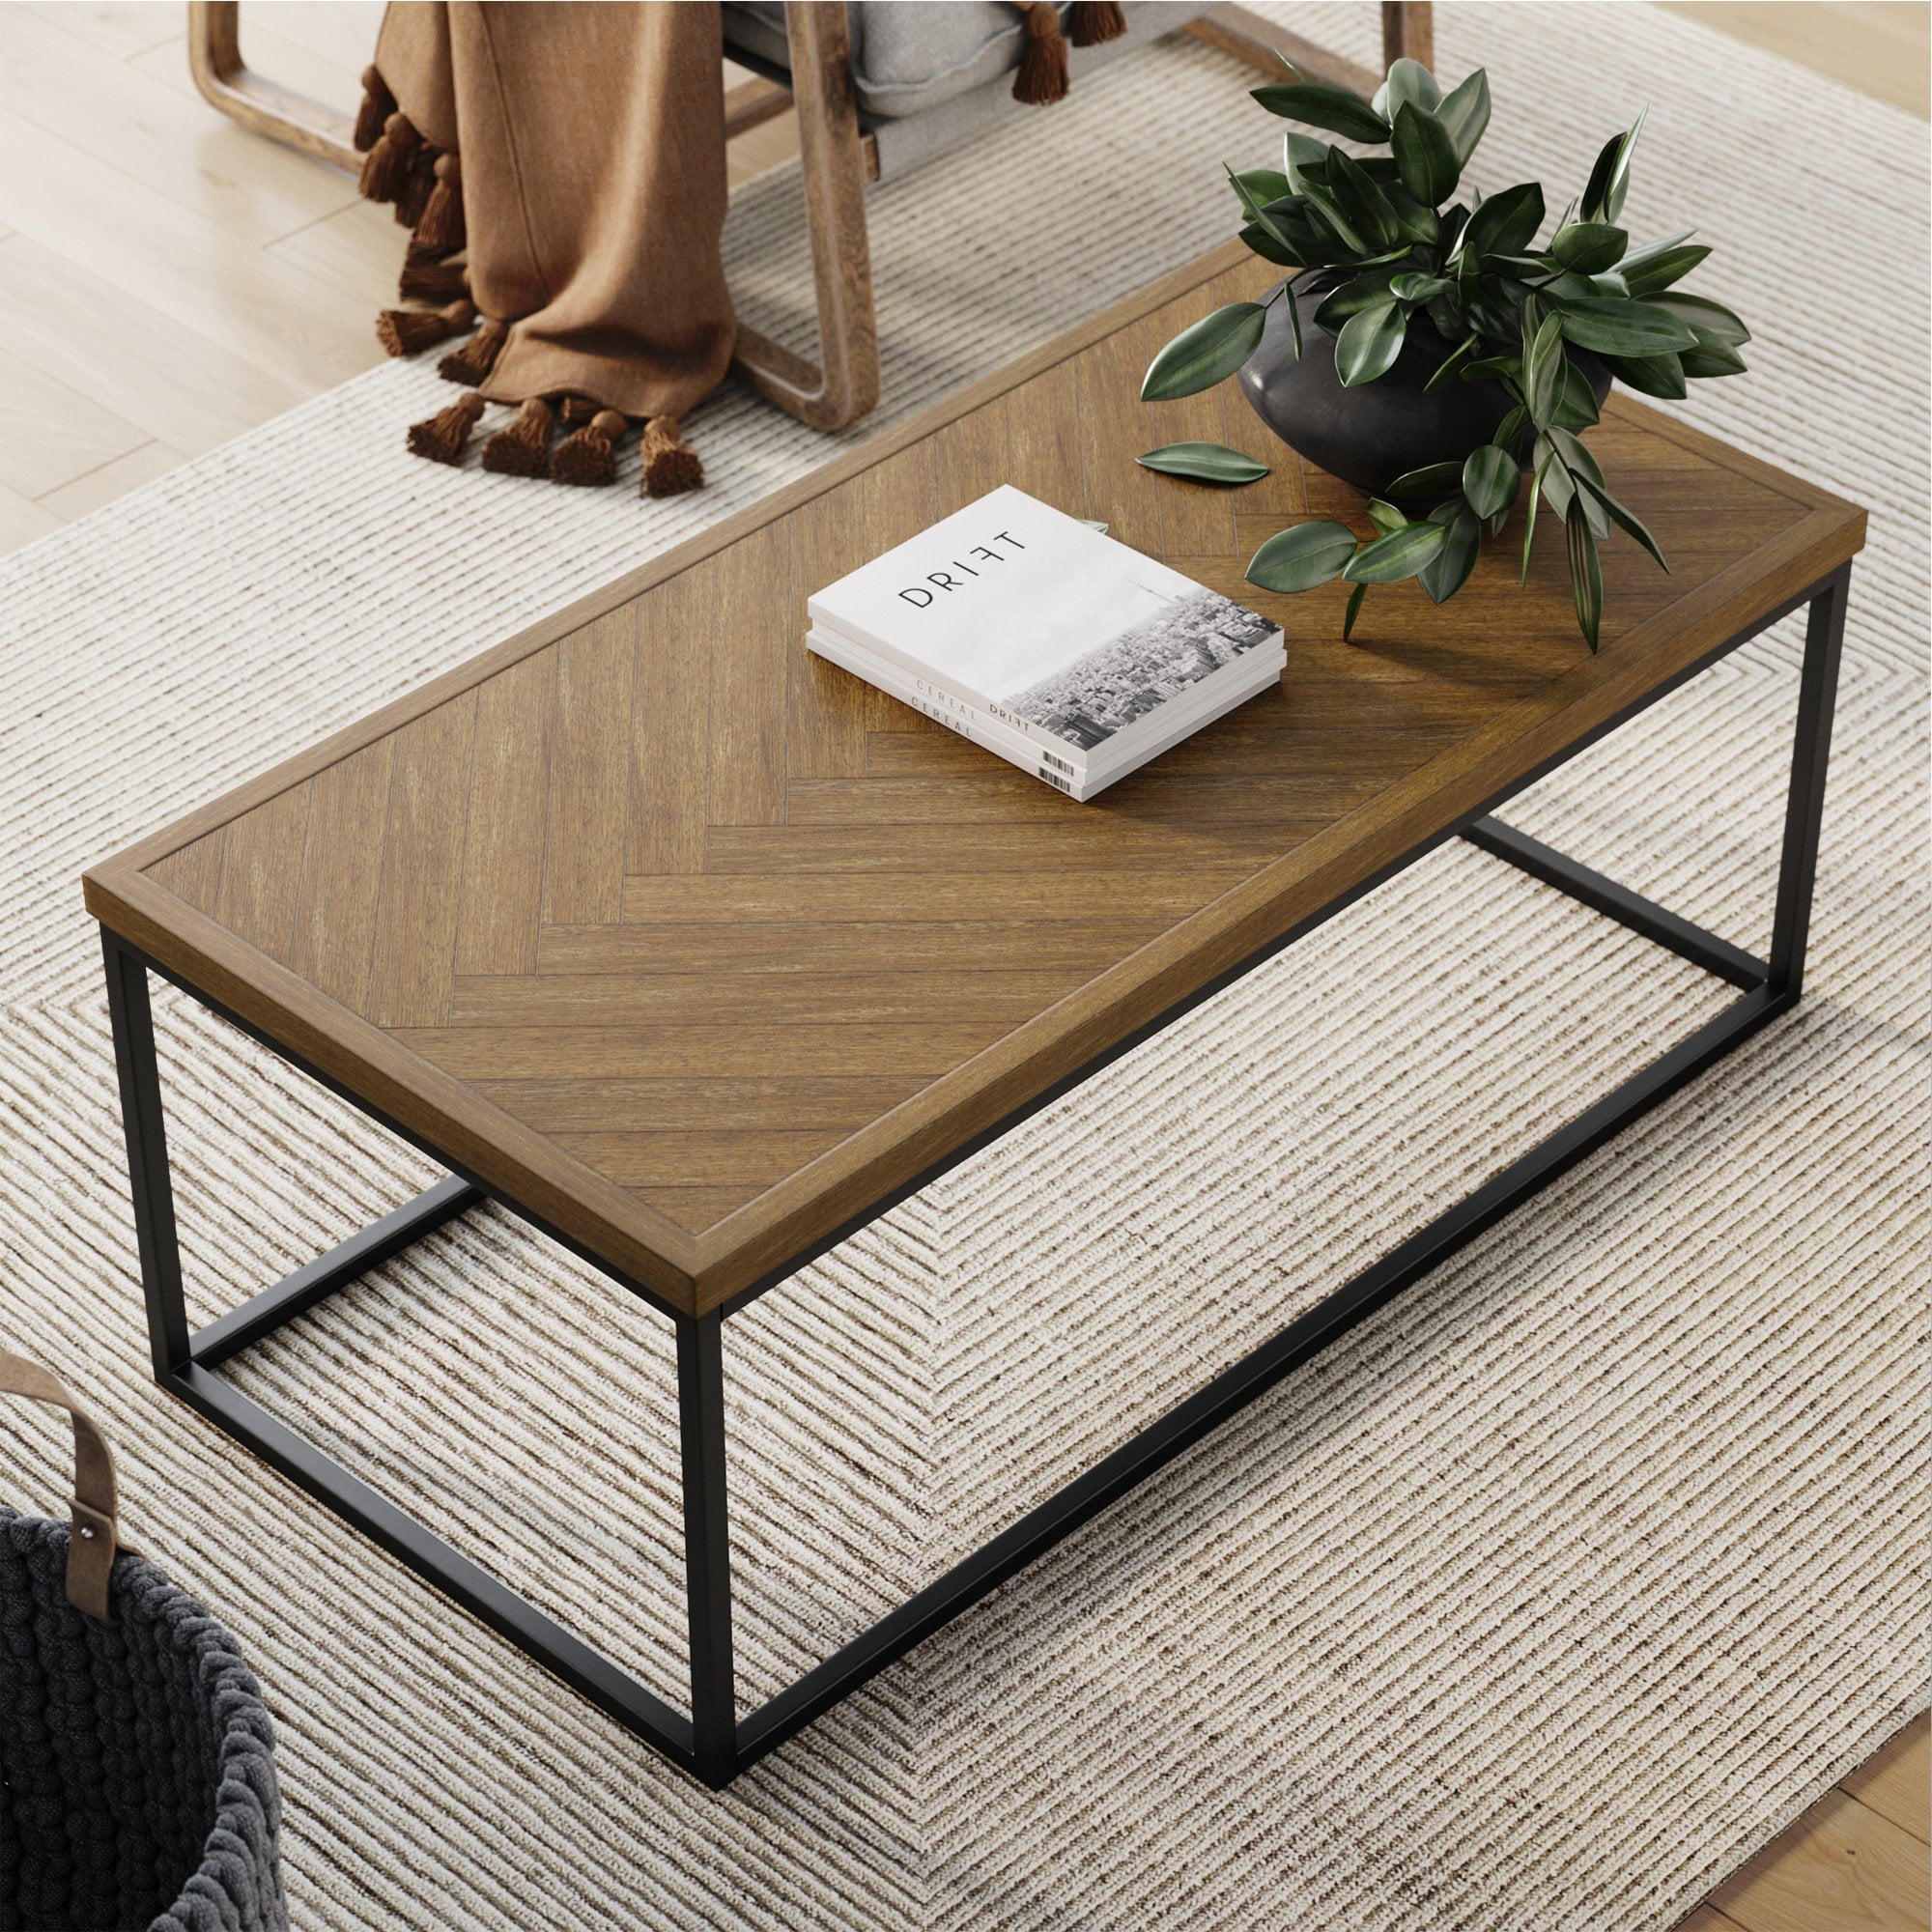 Nathan James Doxa Modern Industrial Coffee Table Wood In Light Brown Herringbone Pattern And Metal Box Frame